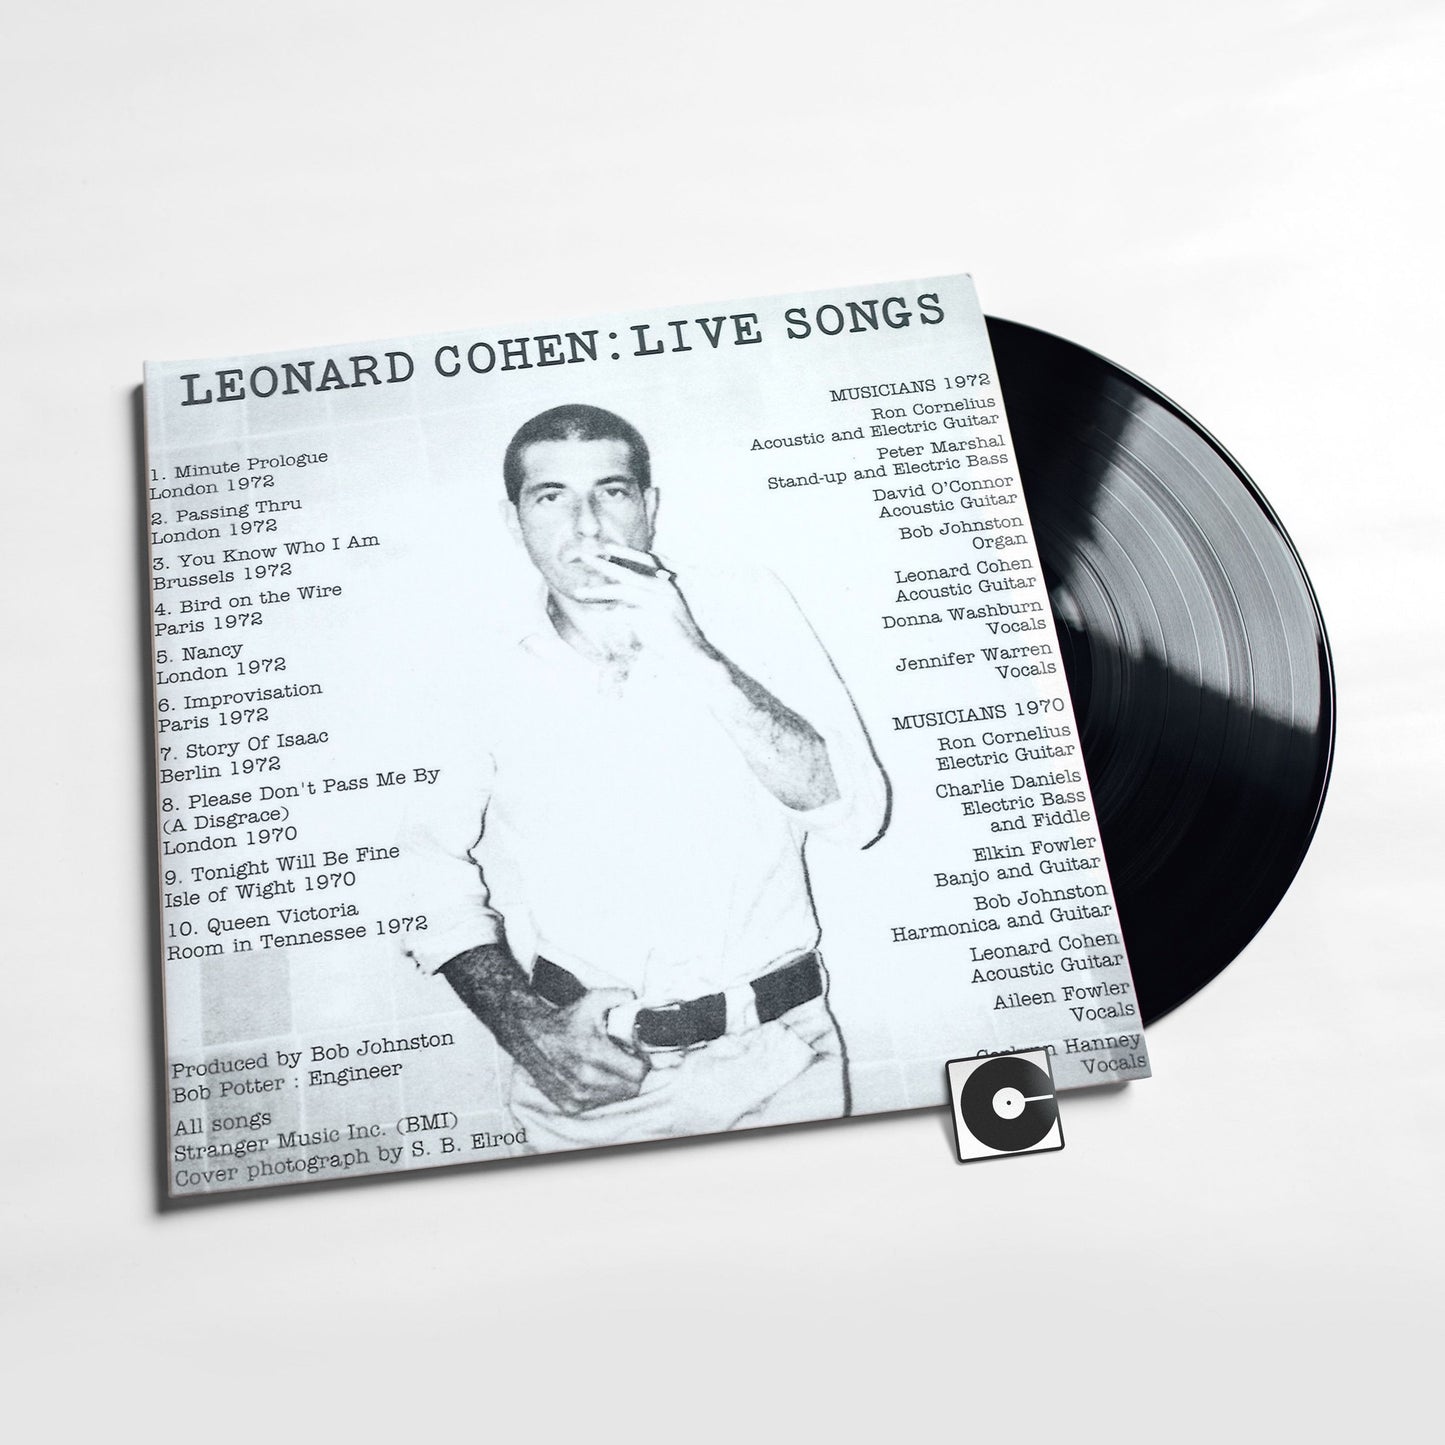 Leonard Cohen - "Leonard Cohen: Live Songs"